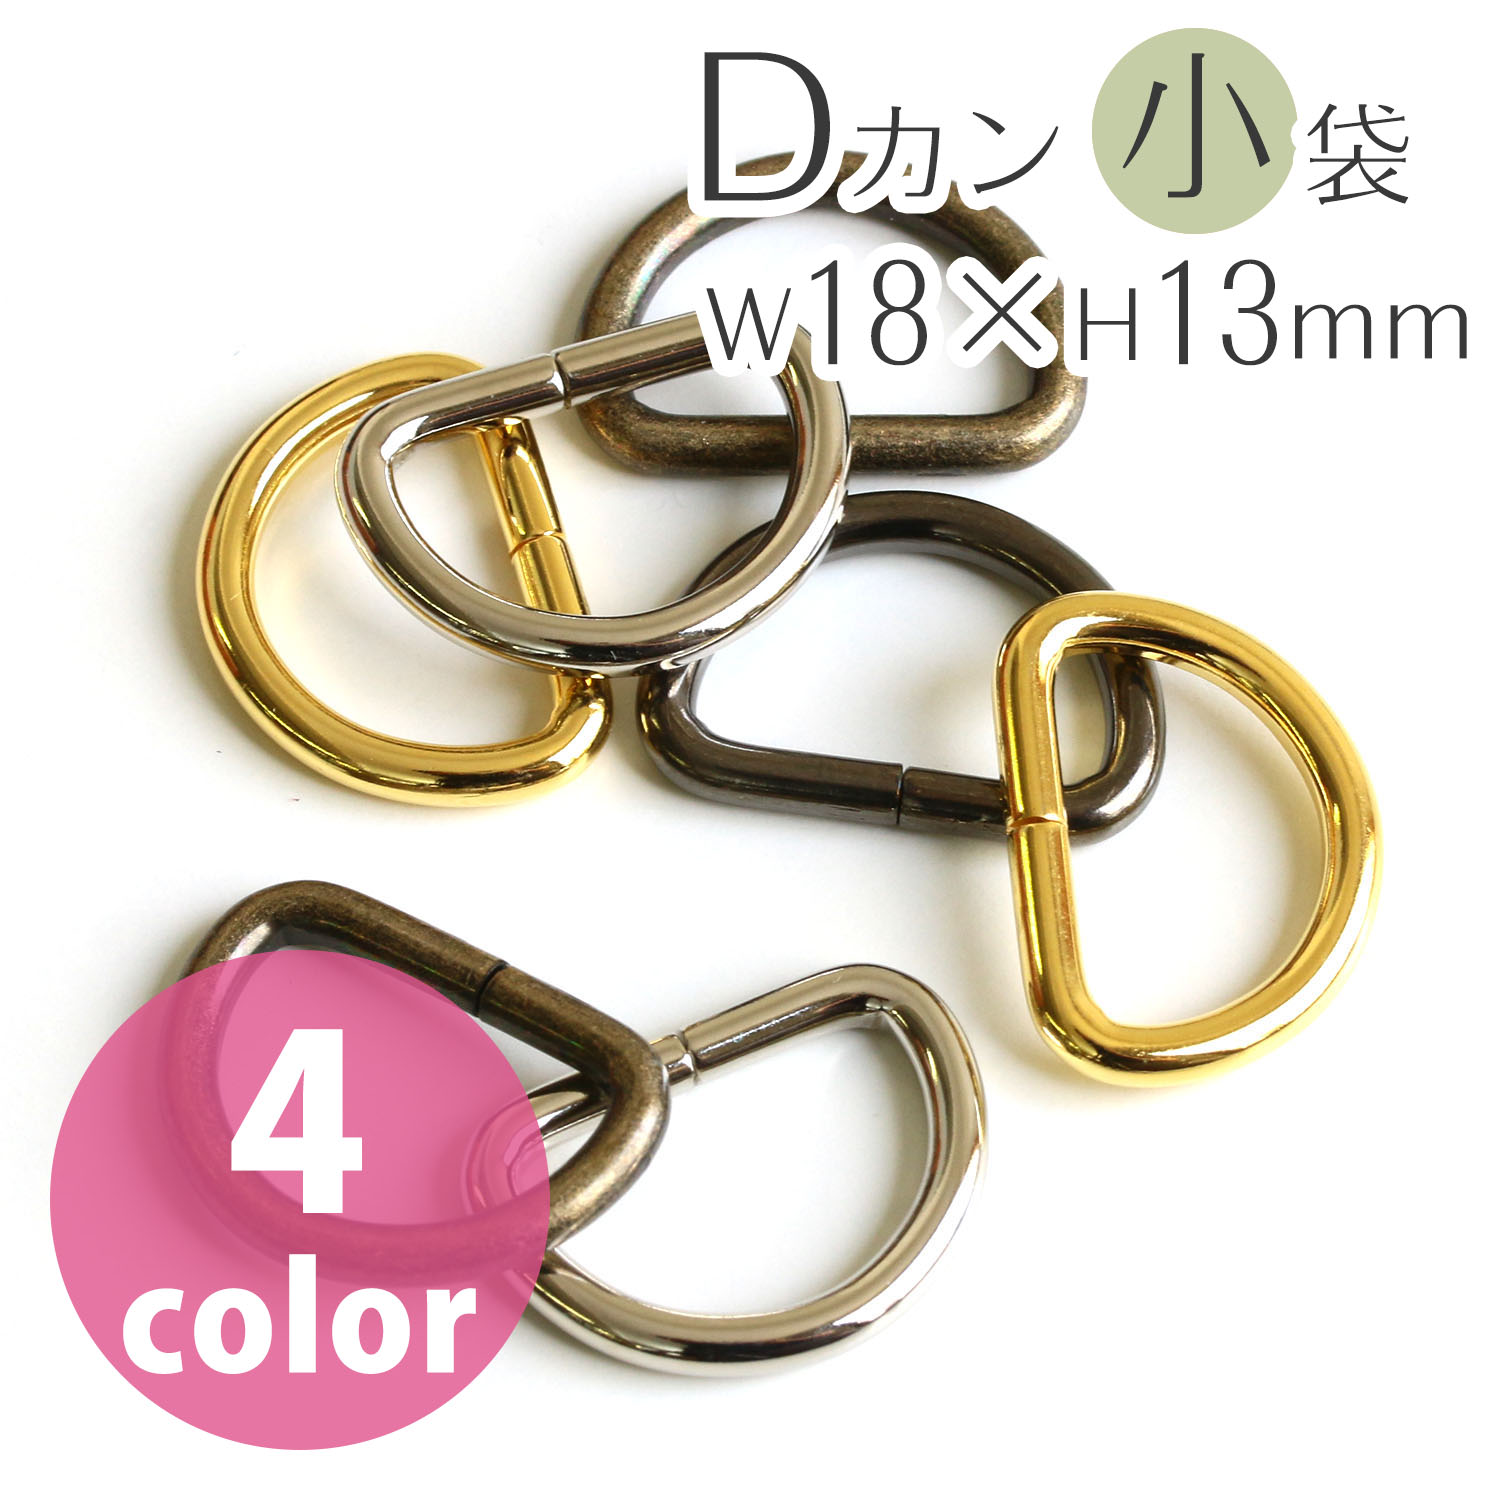 S22 D-Ring  18 x 13mm", diameter 3mm  (bag)